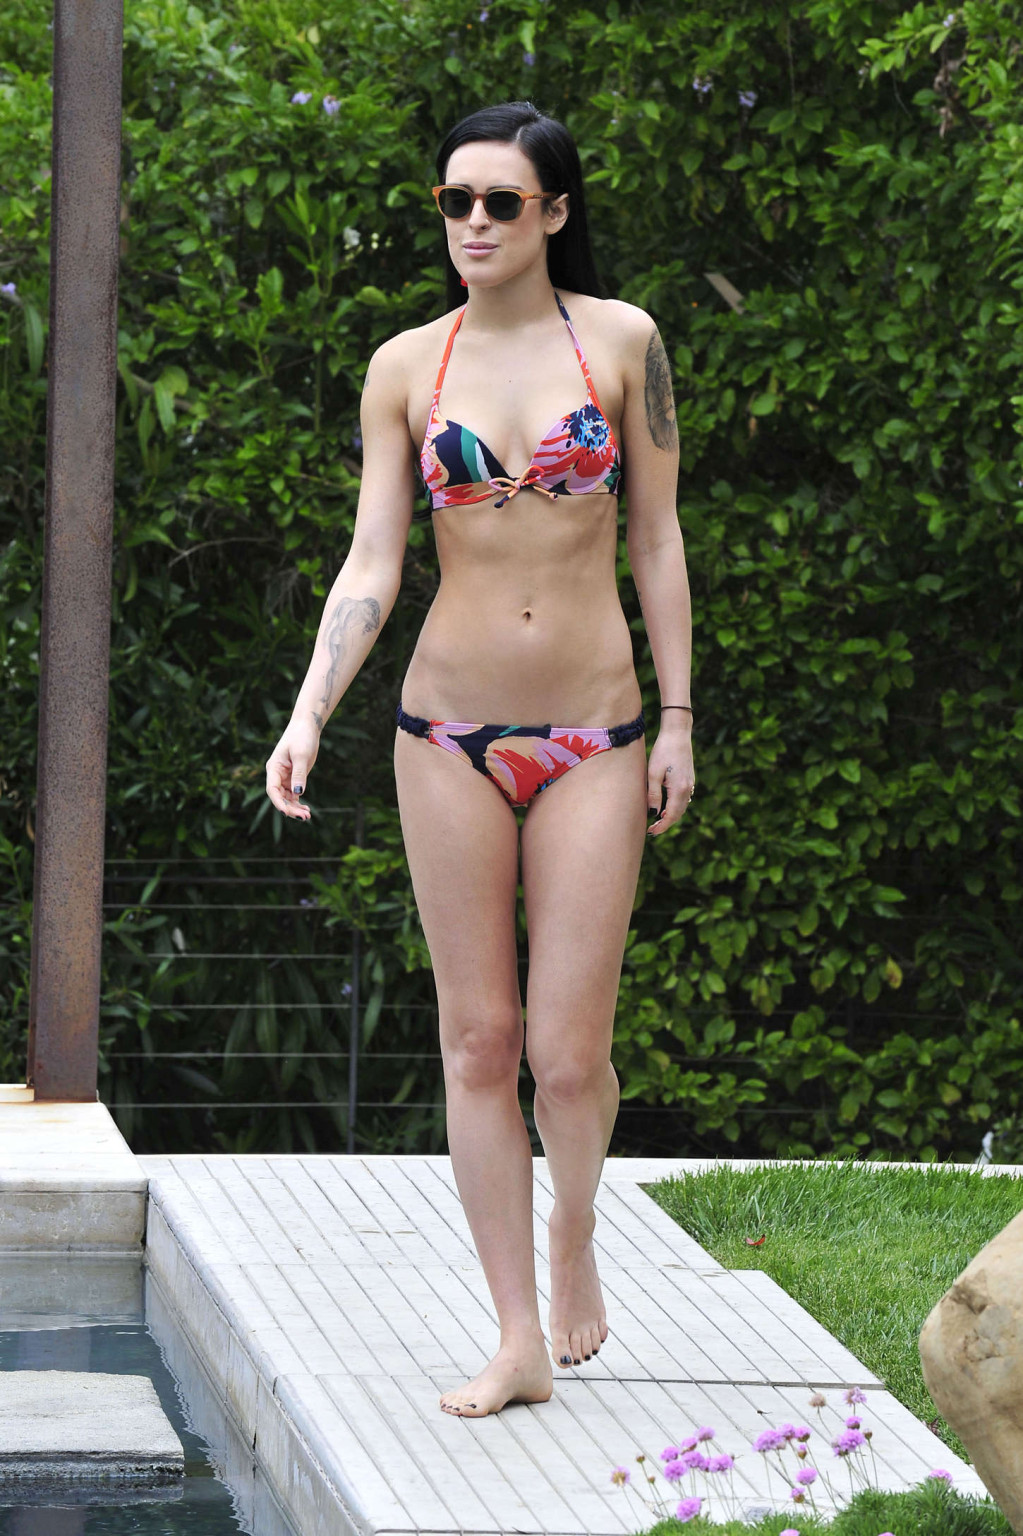 Rumer willis exhibant son corps sexy en bikini au bord de la piscine pour le memorial day photoshoo.
 #75163329